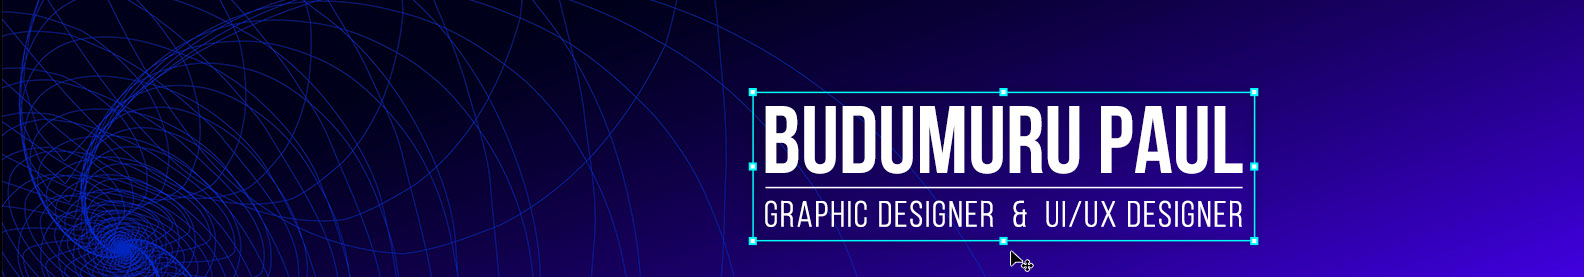 Banner profilu uživatele Paul Budumuru